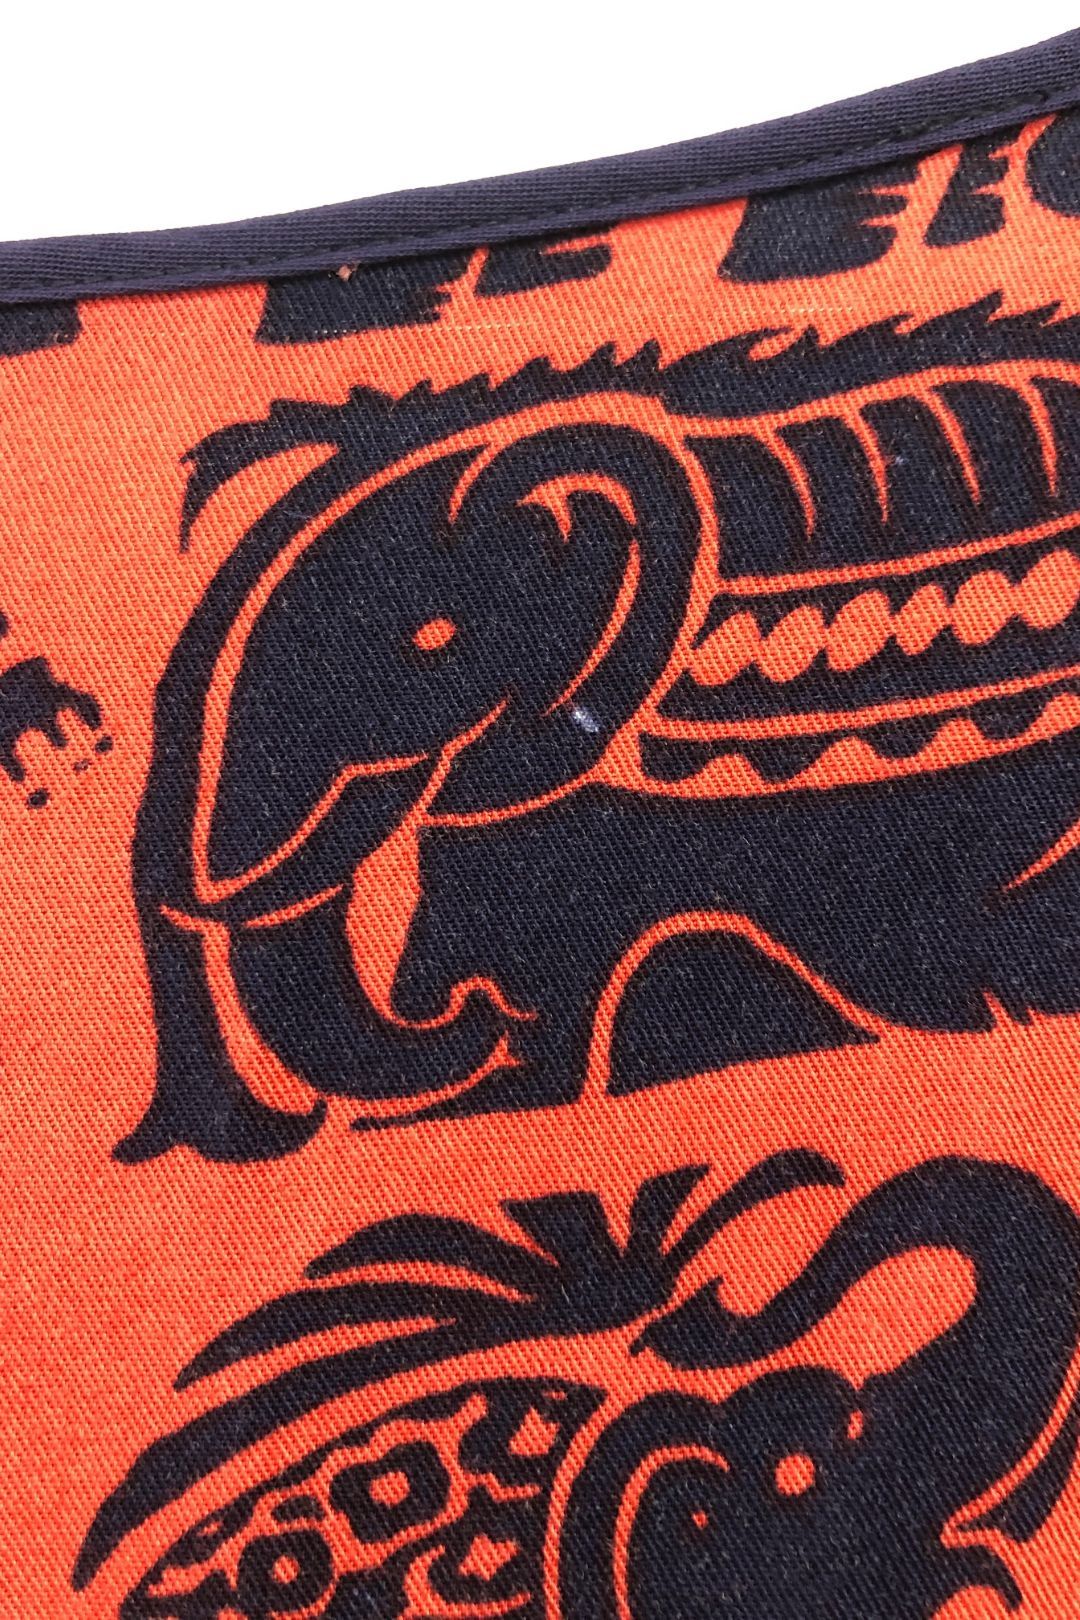 Leona Edmiston - Elephant Print Gathered Waist Dress